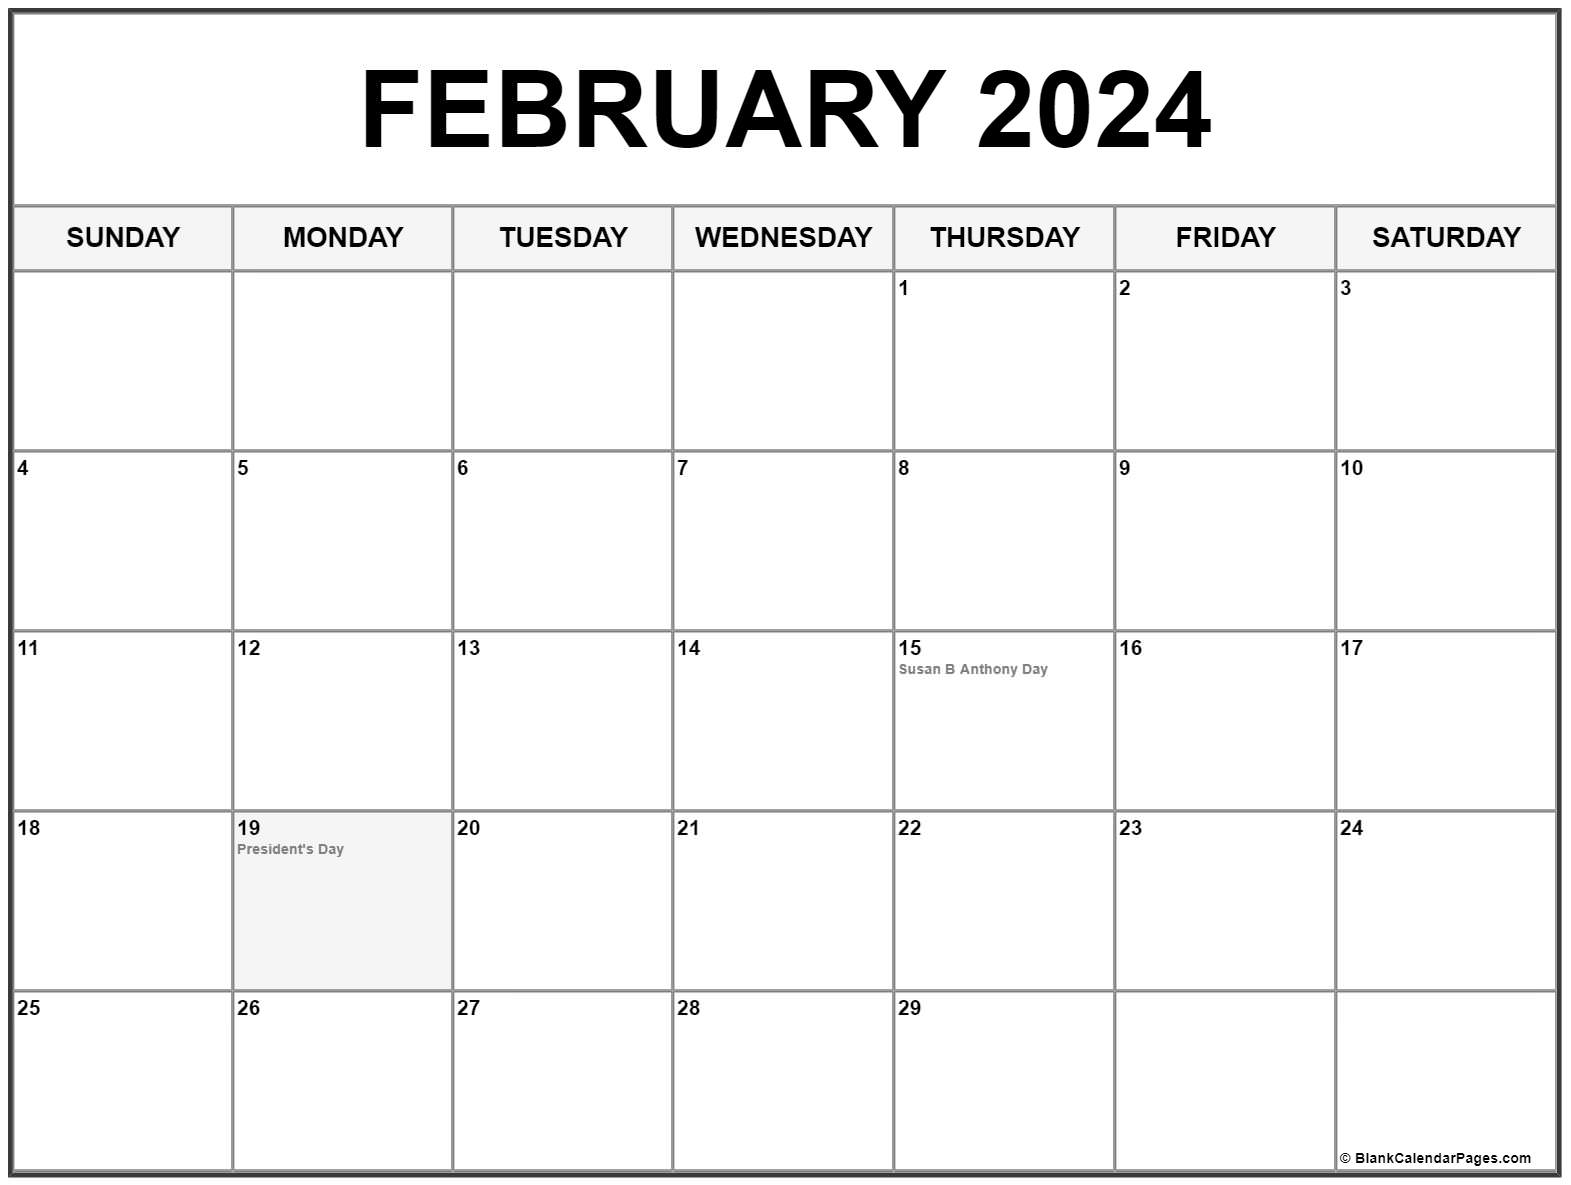 Feb 2024 Calendar With Holidays Easy to Use Calendar App 2024